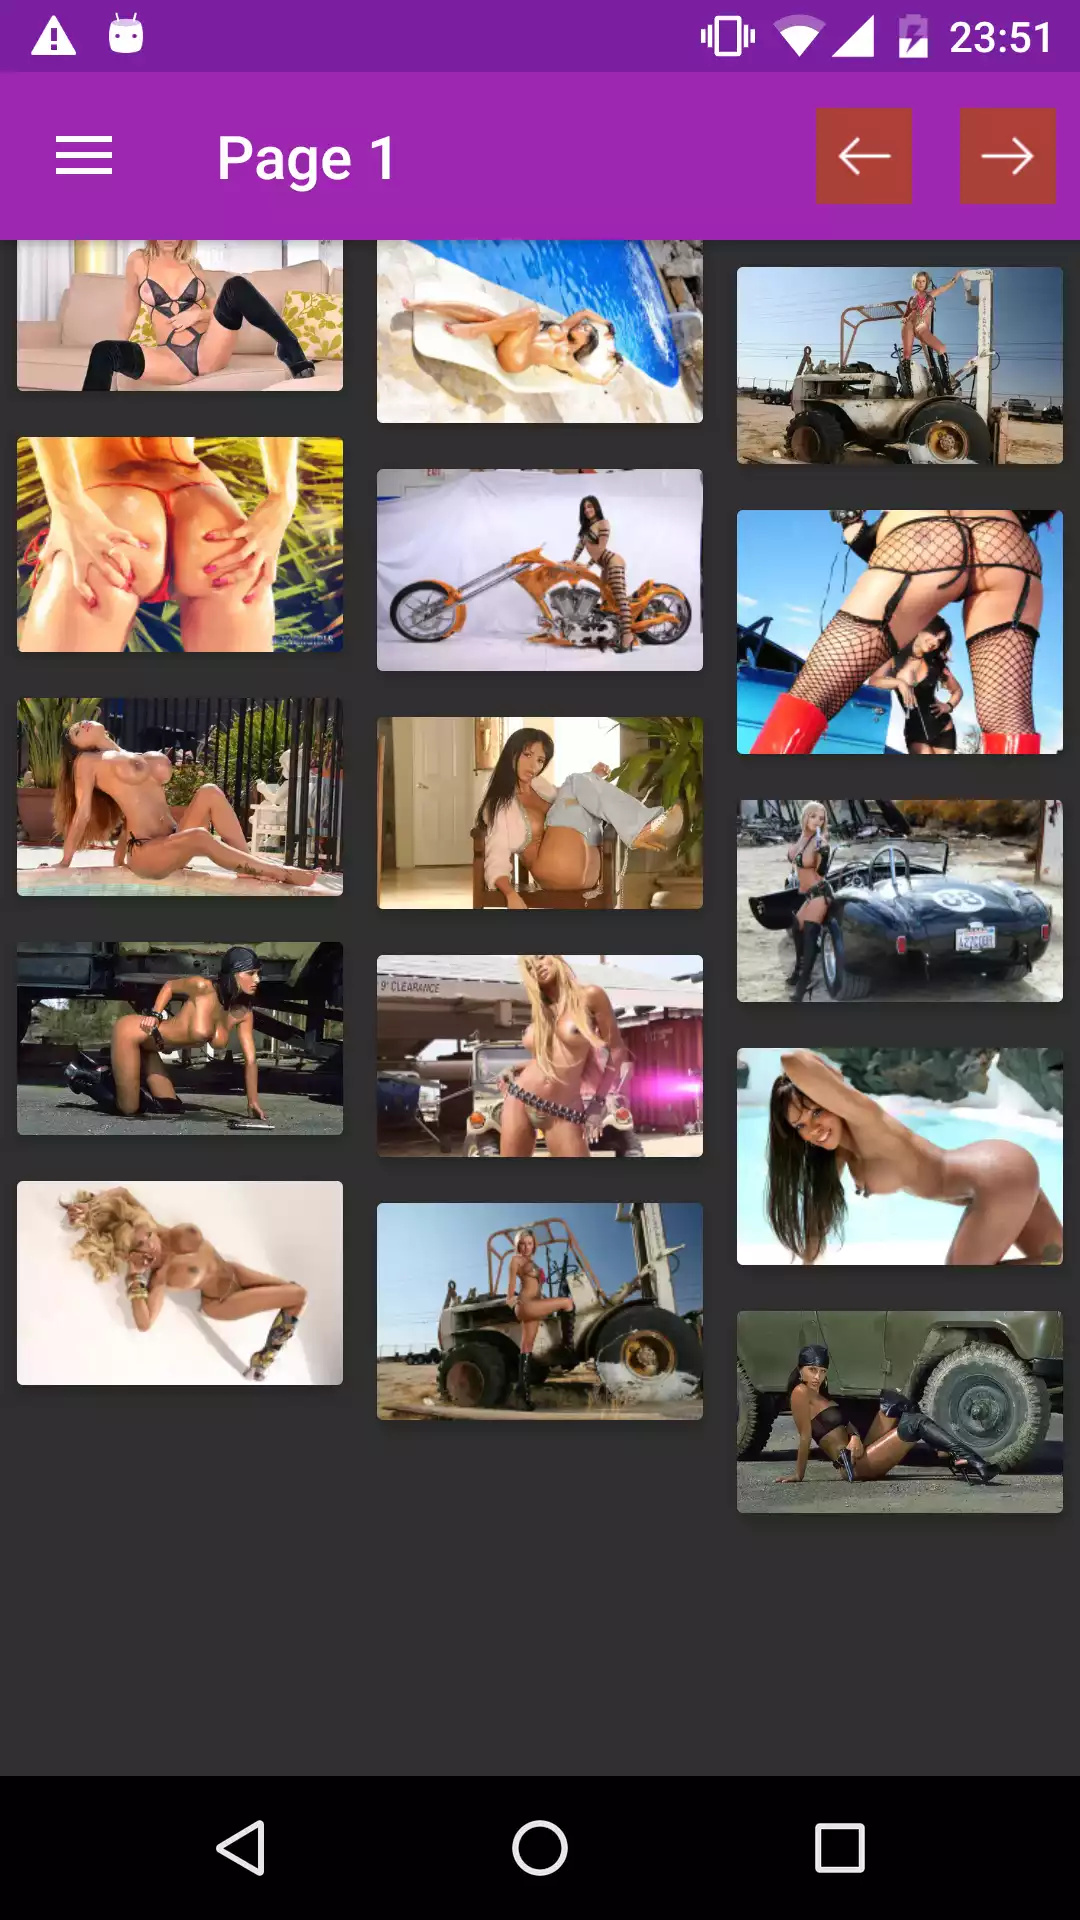 Action Wallpapers apk,pornstar,backgrounds,futanari,image,top,wallpapers,adult,galleries,puzzle,photo,shemale,updates,comics,hentai,video,sexy,porn,apps,erotic